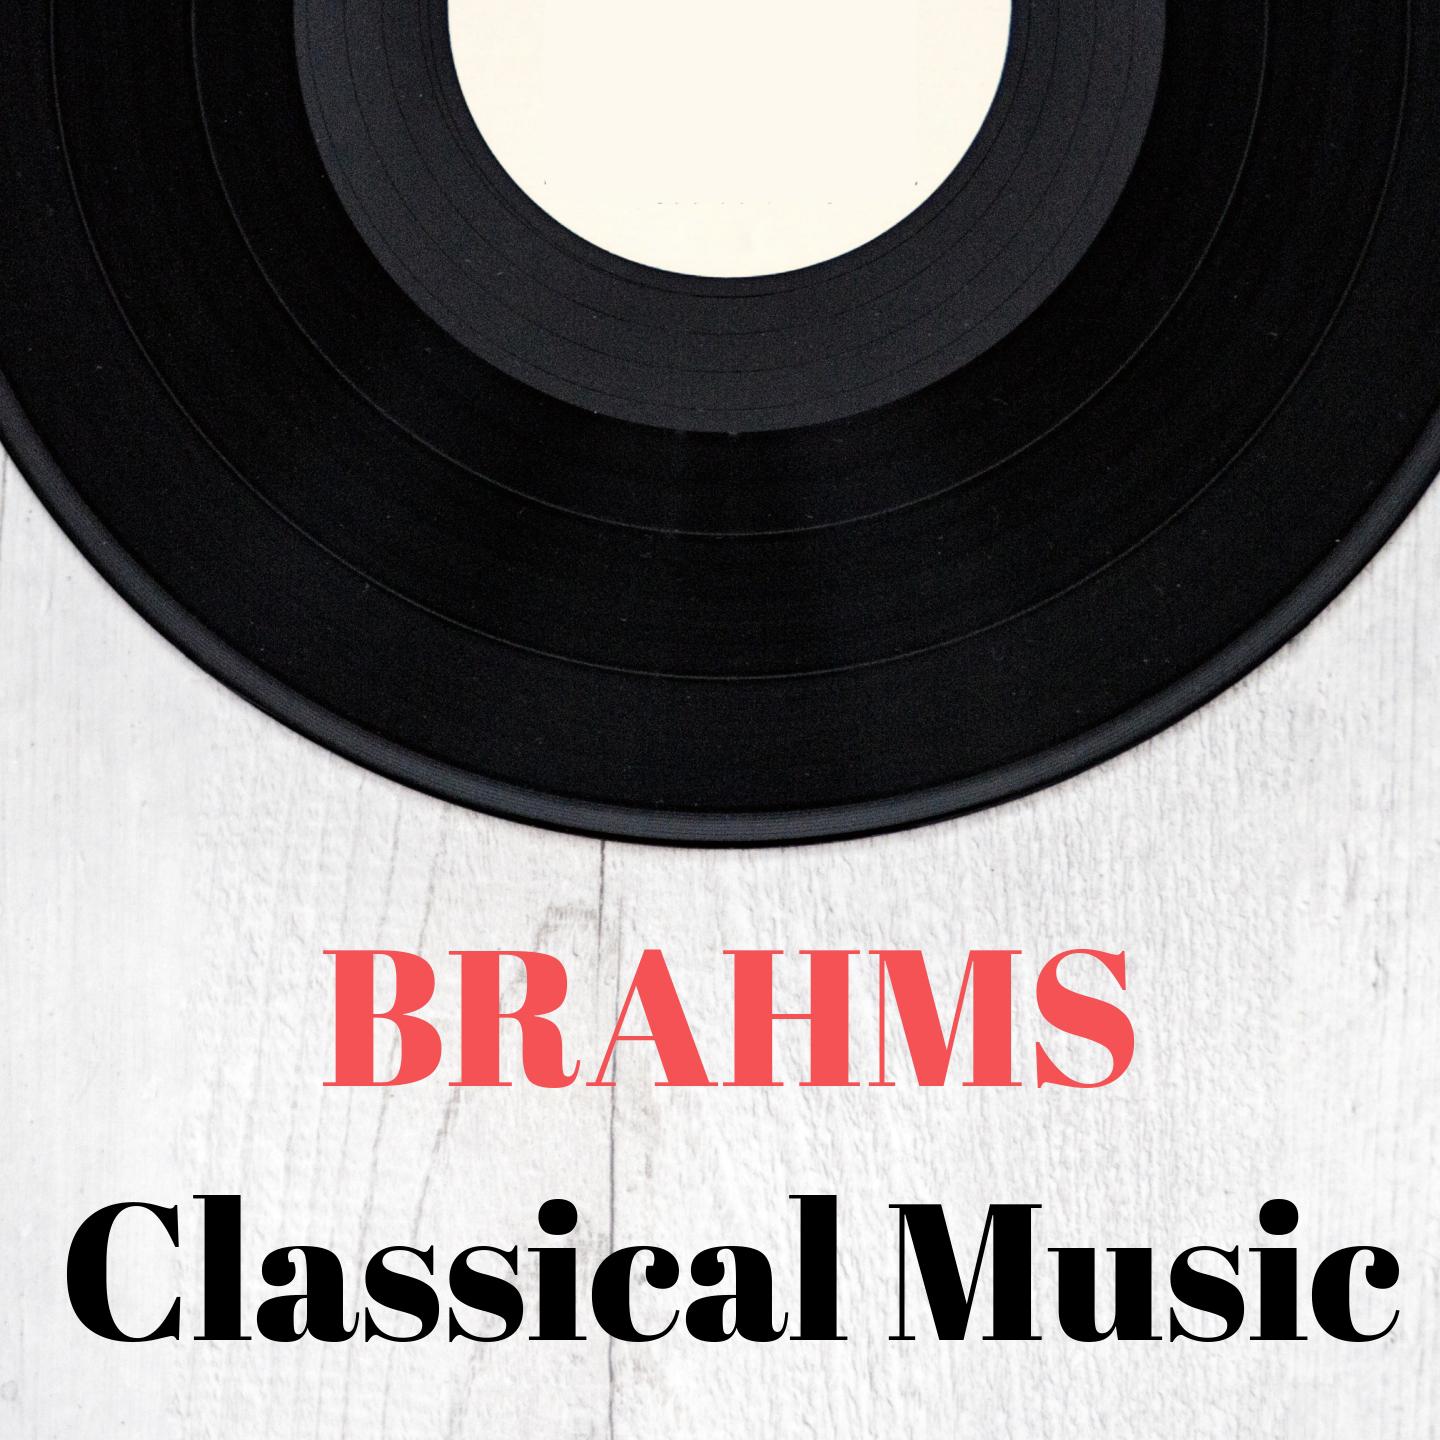 Brahms Classical Music